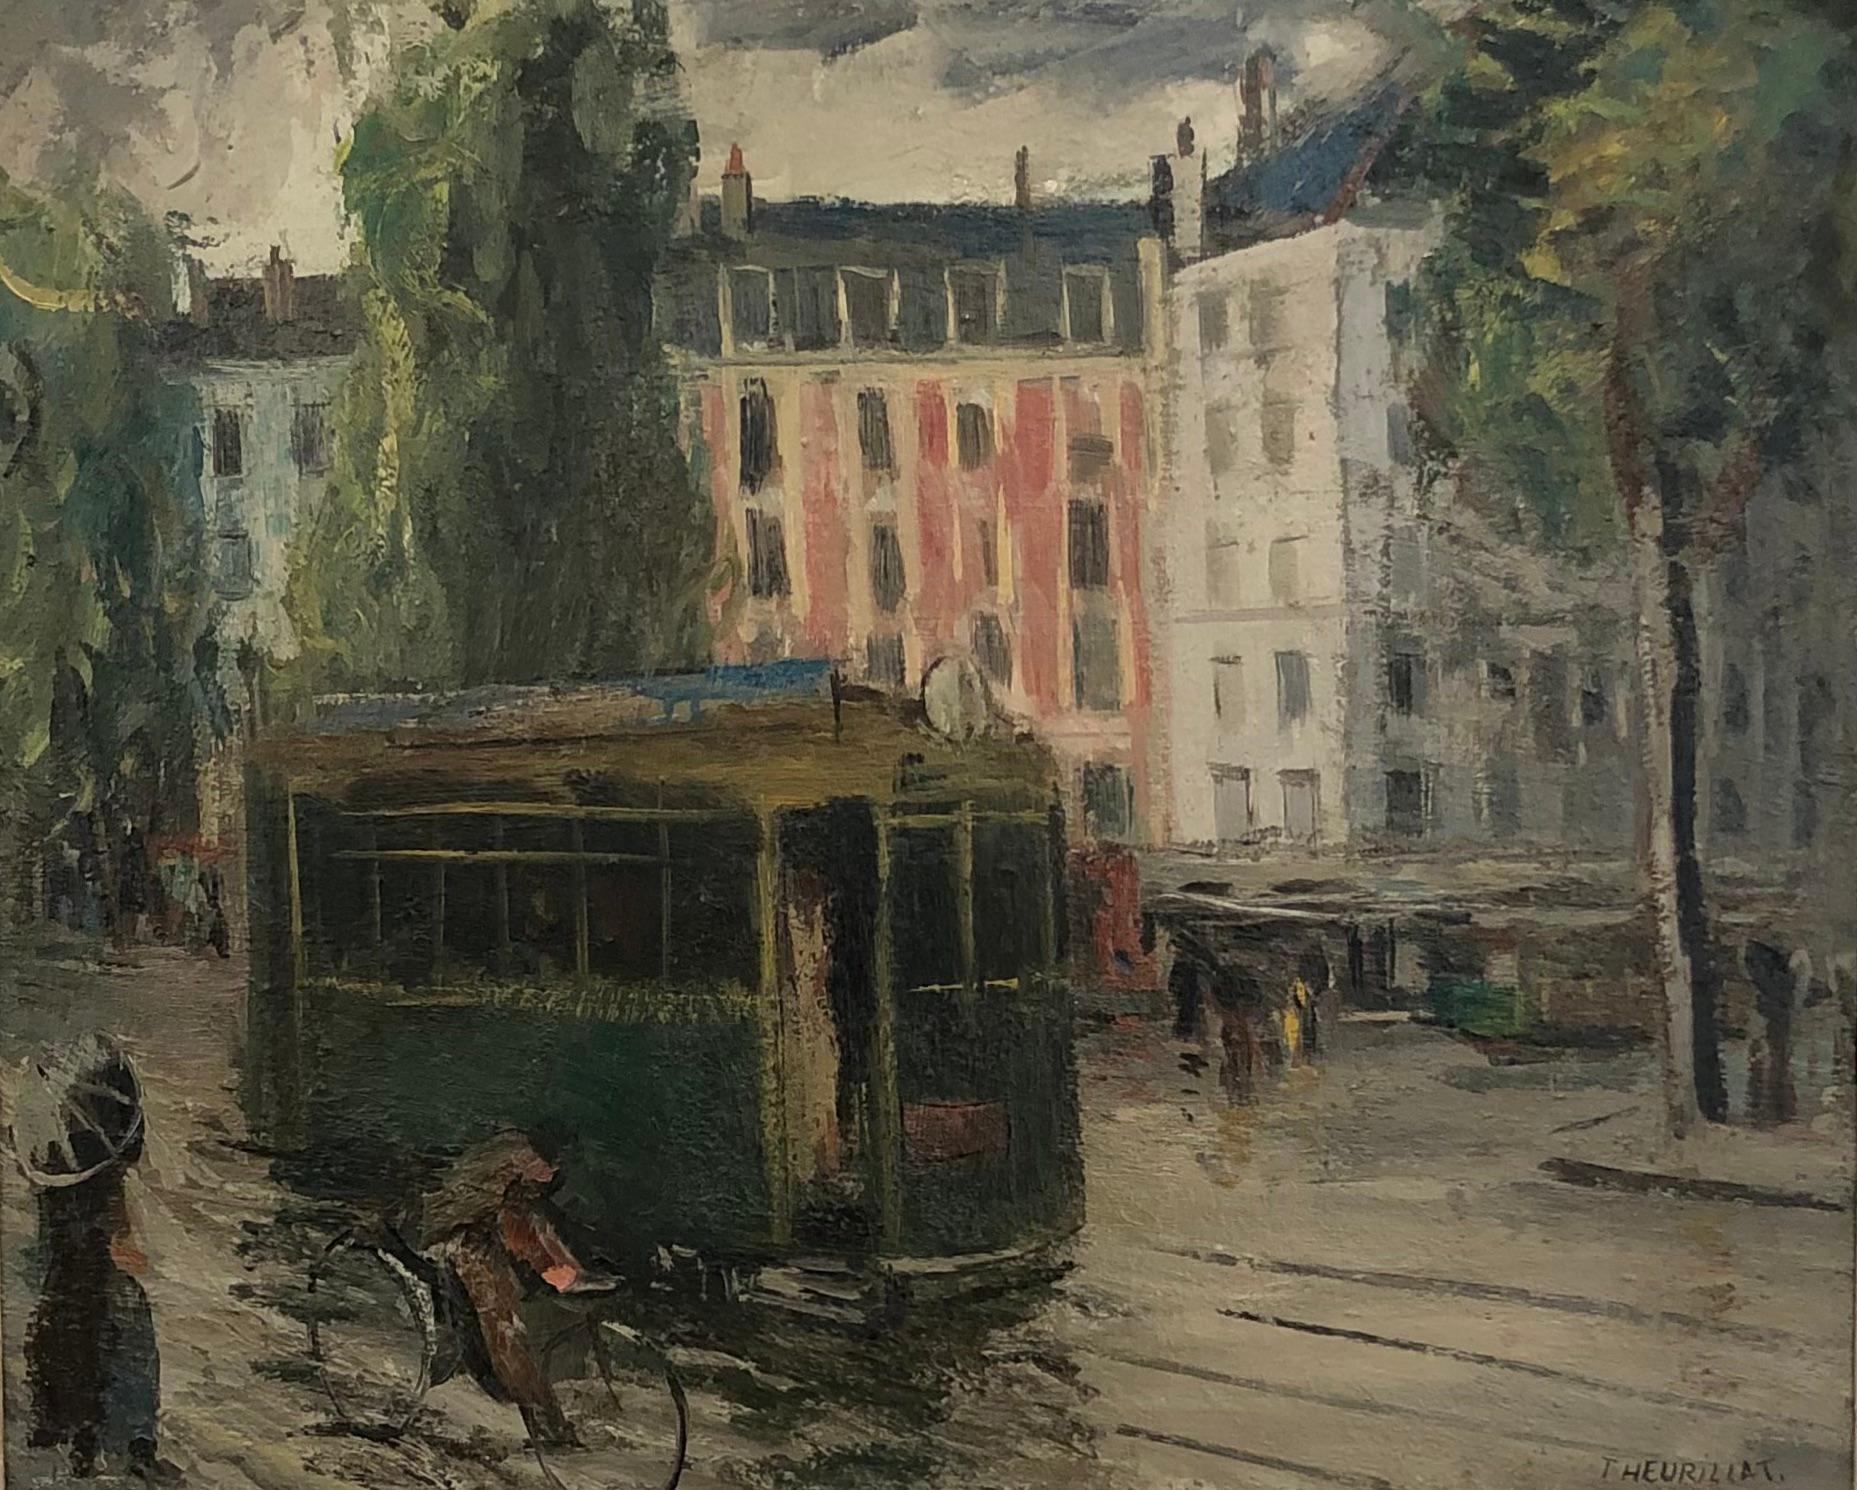 Herbert Theurillat Landscape Painting - Carrefour de Rive on a rainy day, Geneva